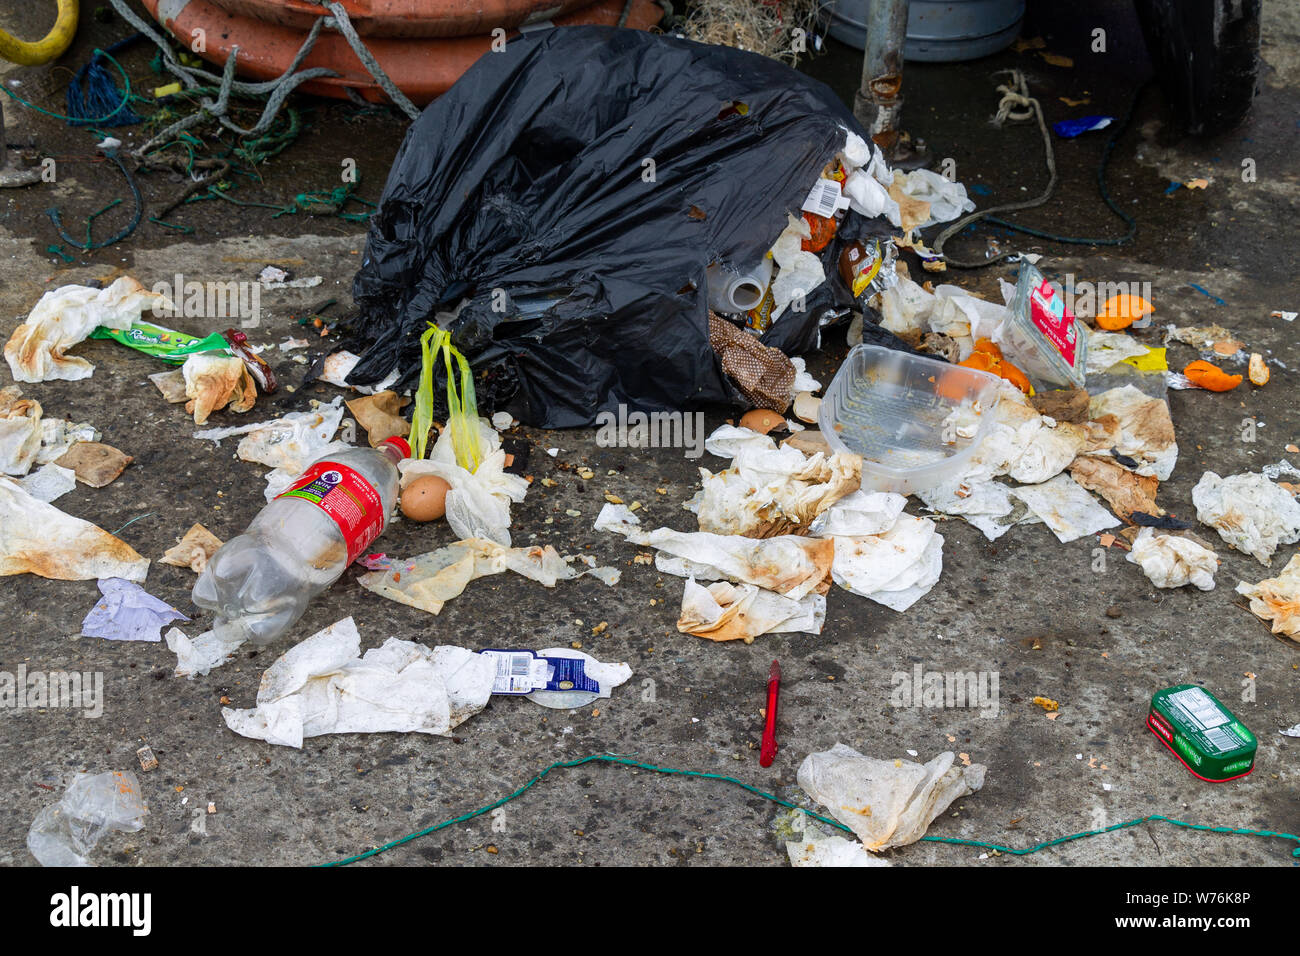 Dumped refuse or trash bag spilling household waste or garbage. Stock Photo